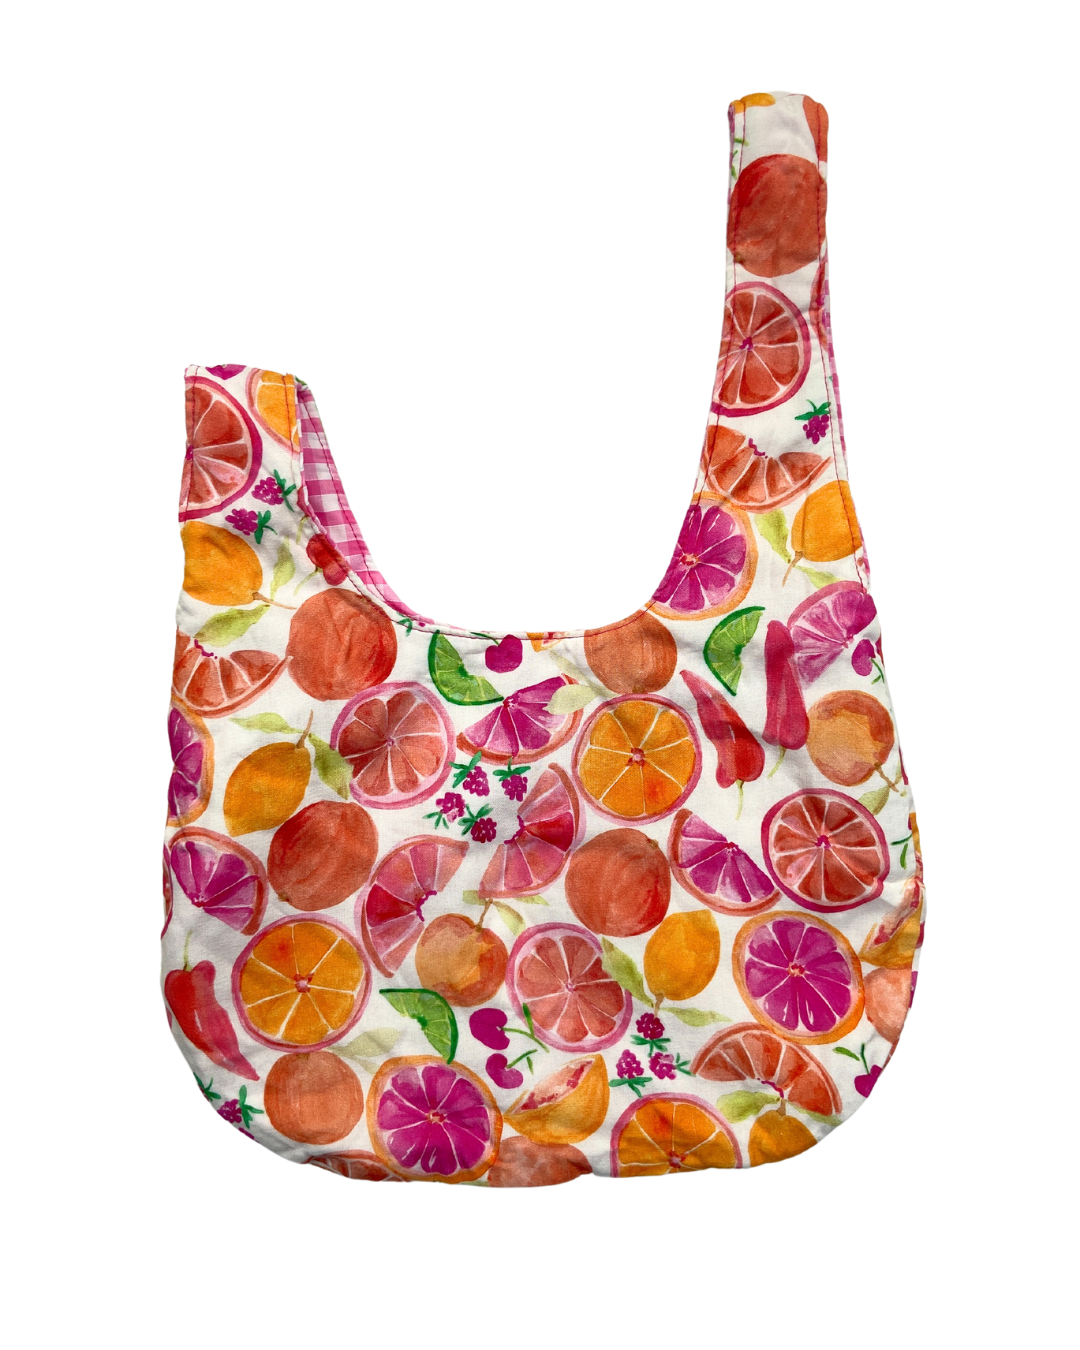 Sew Last Summer Fruit Print Bag